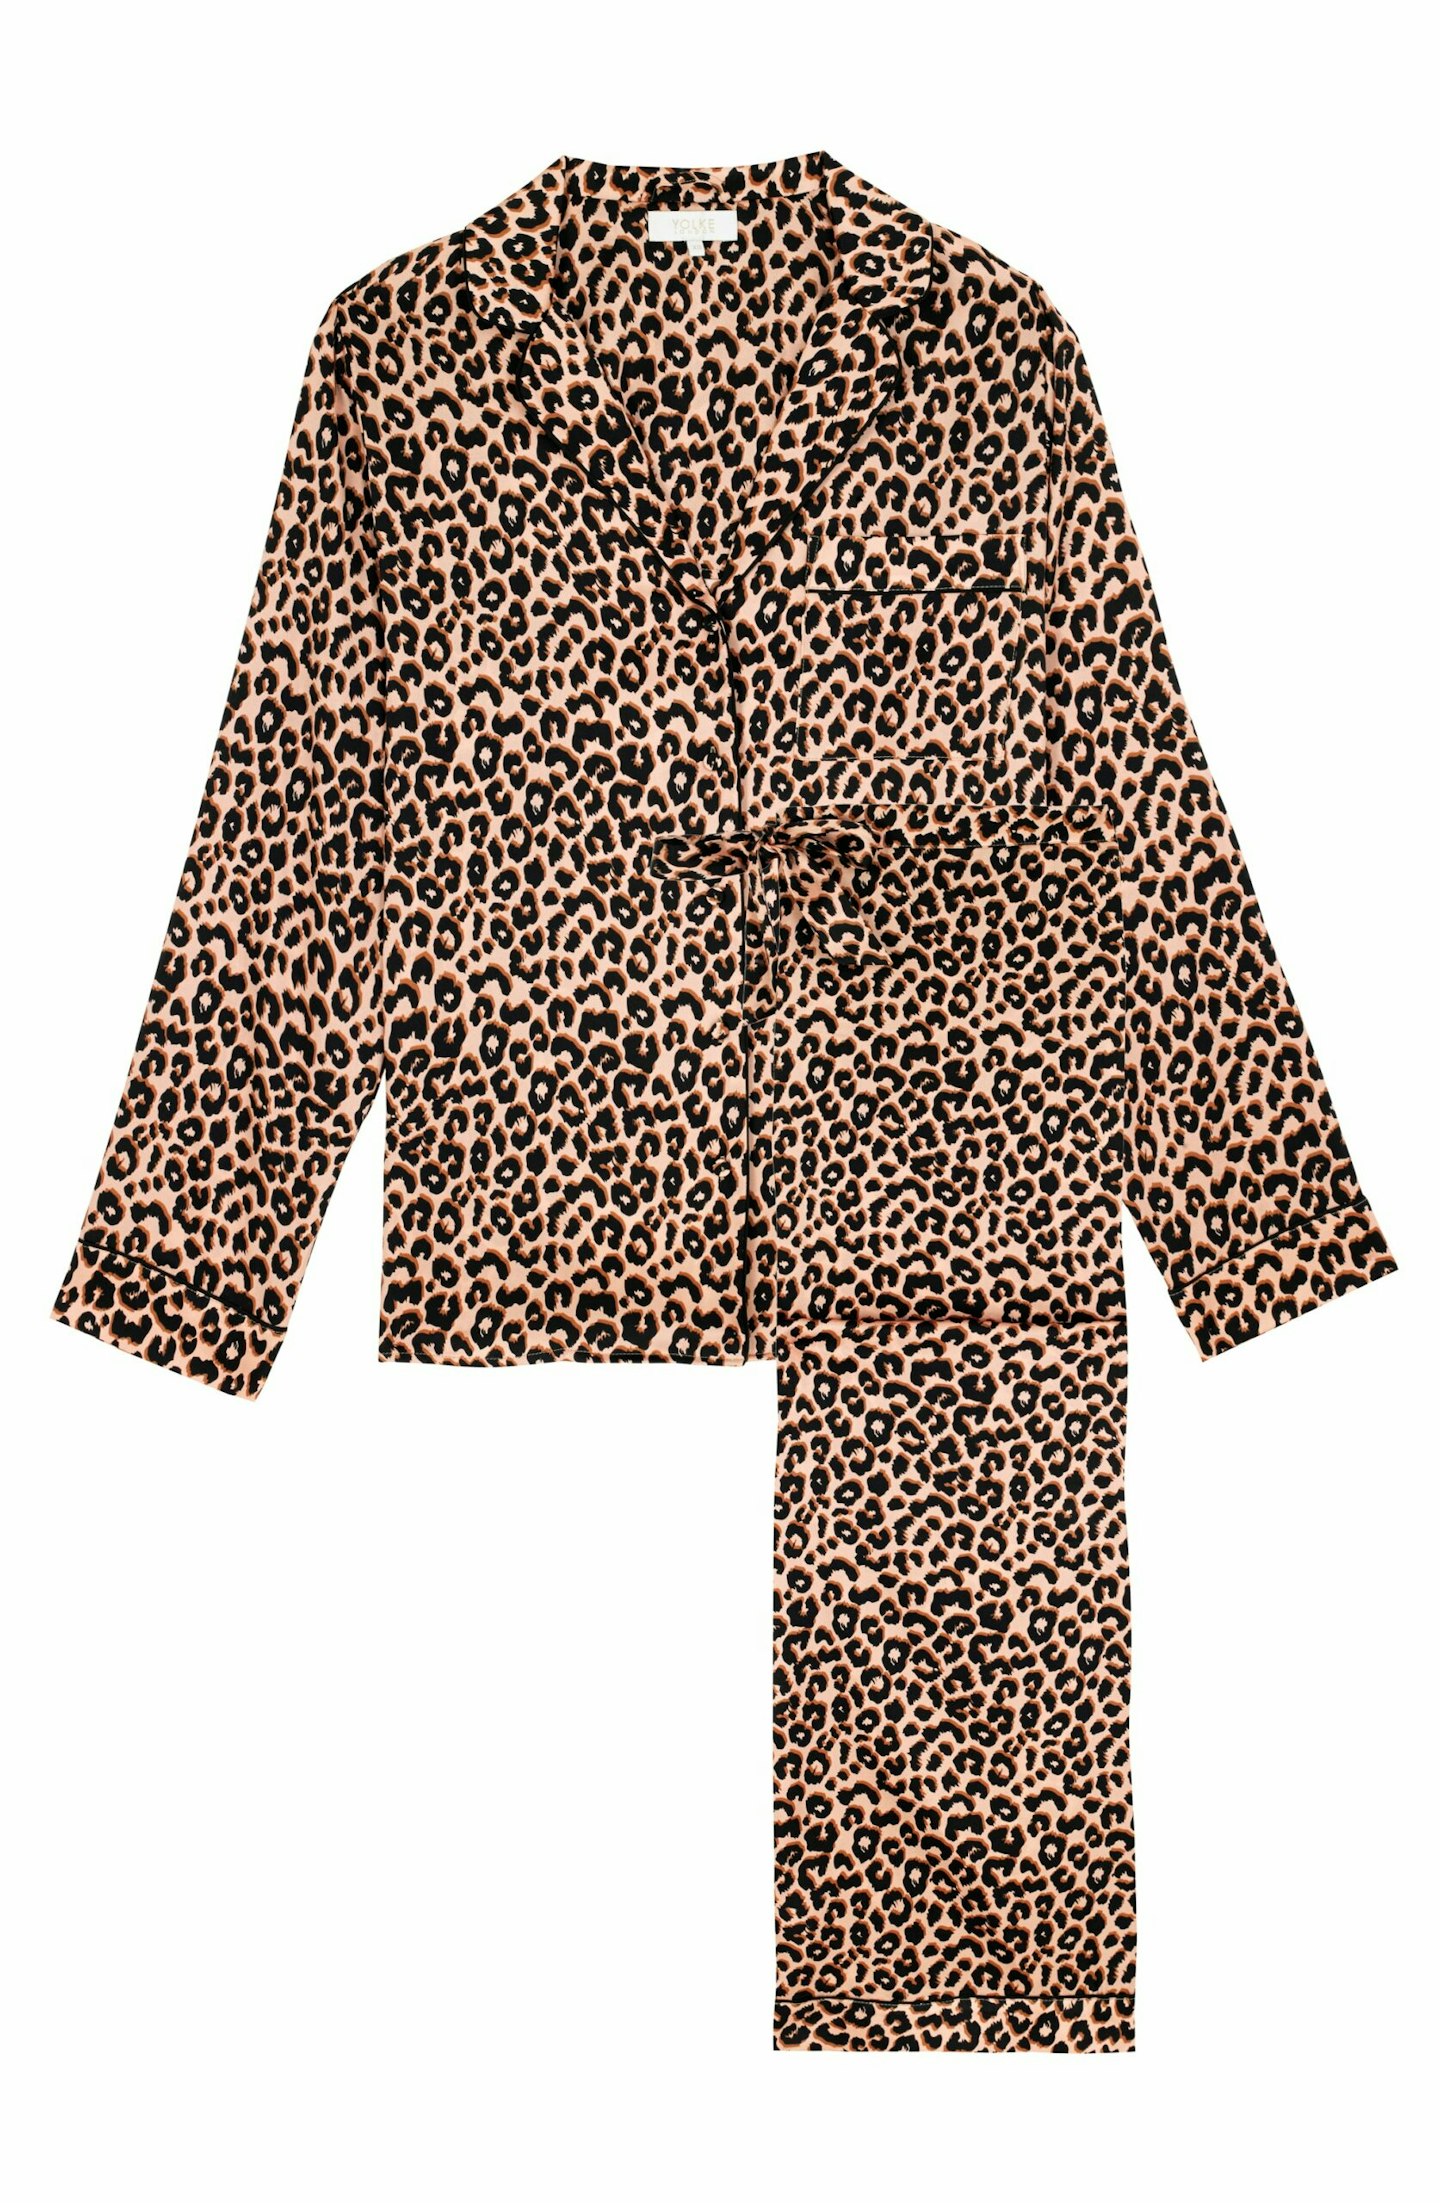 Yolke leopard best christmas pyjamas